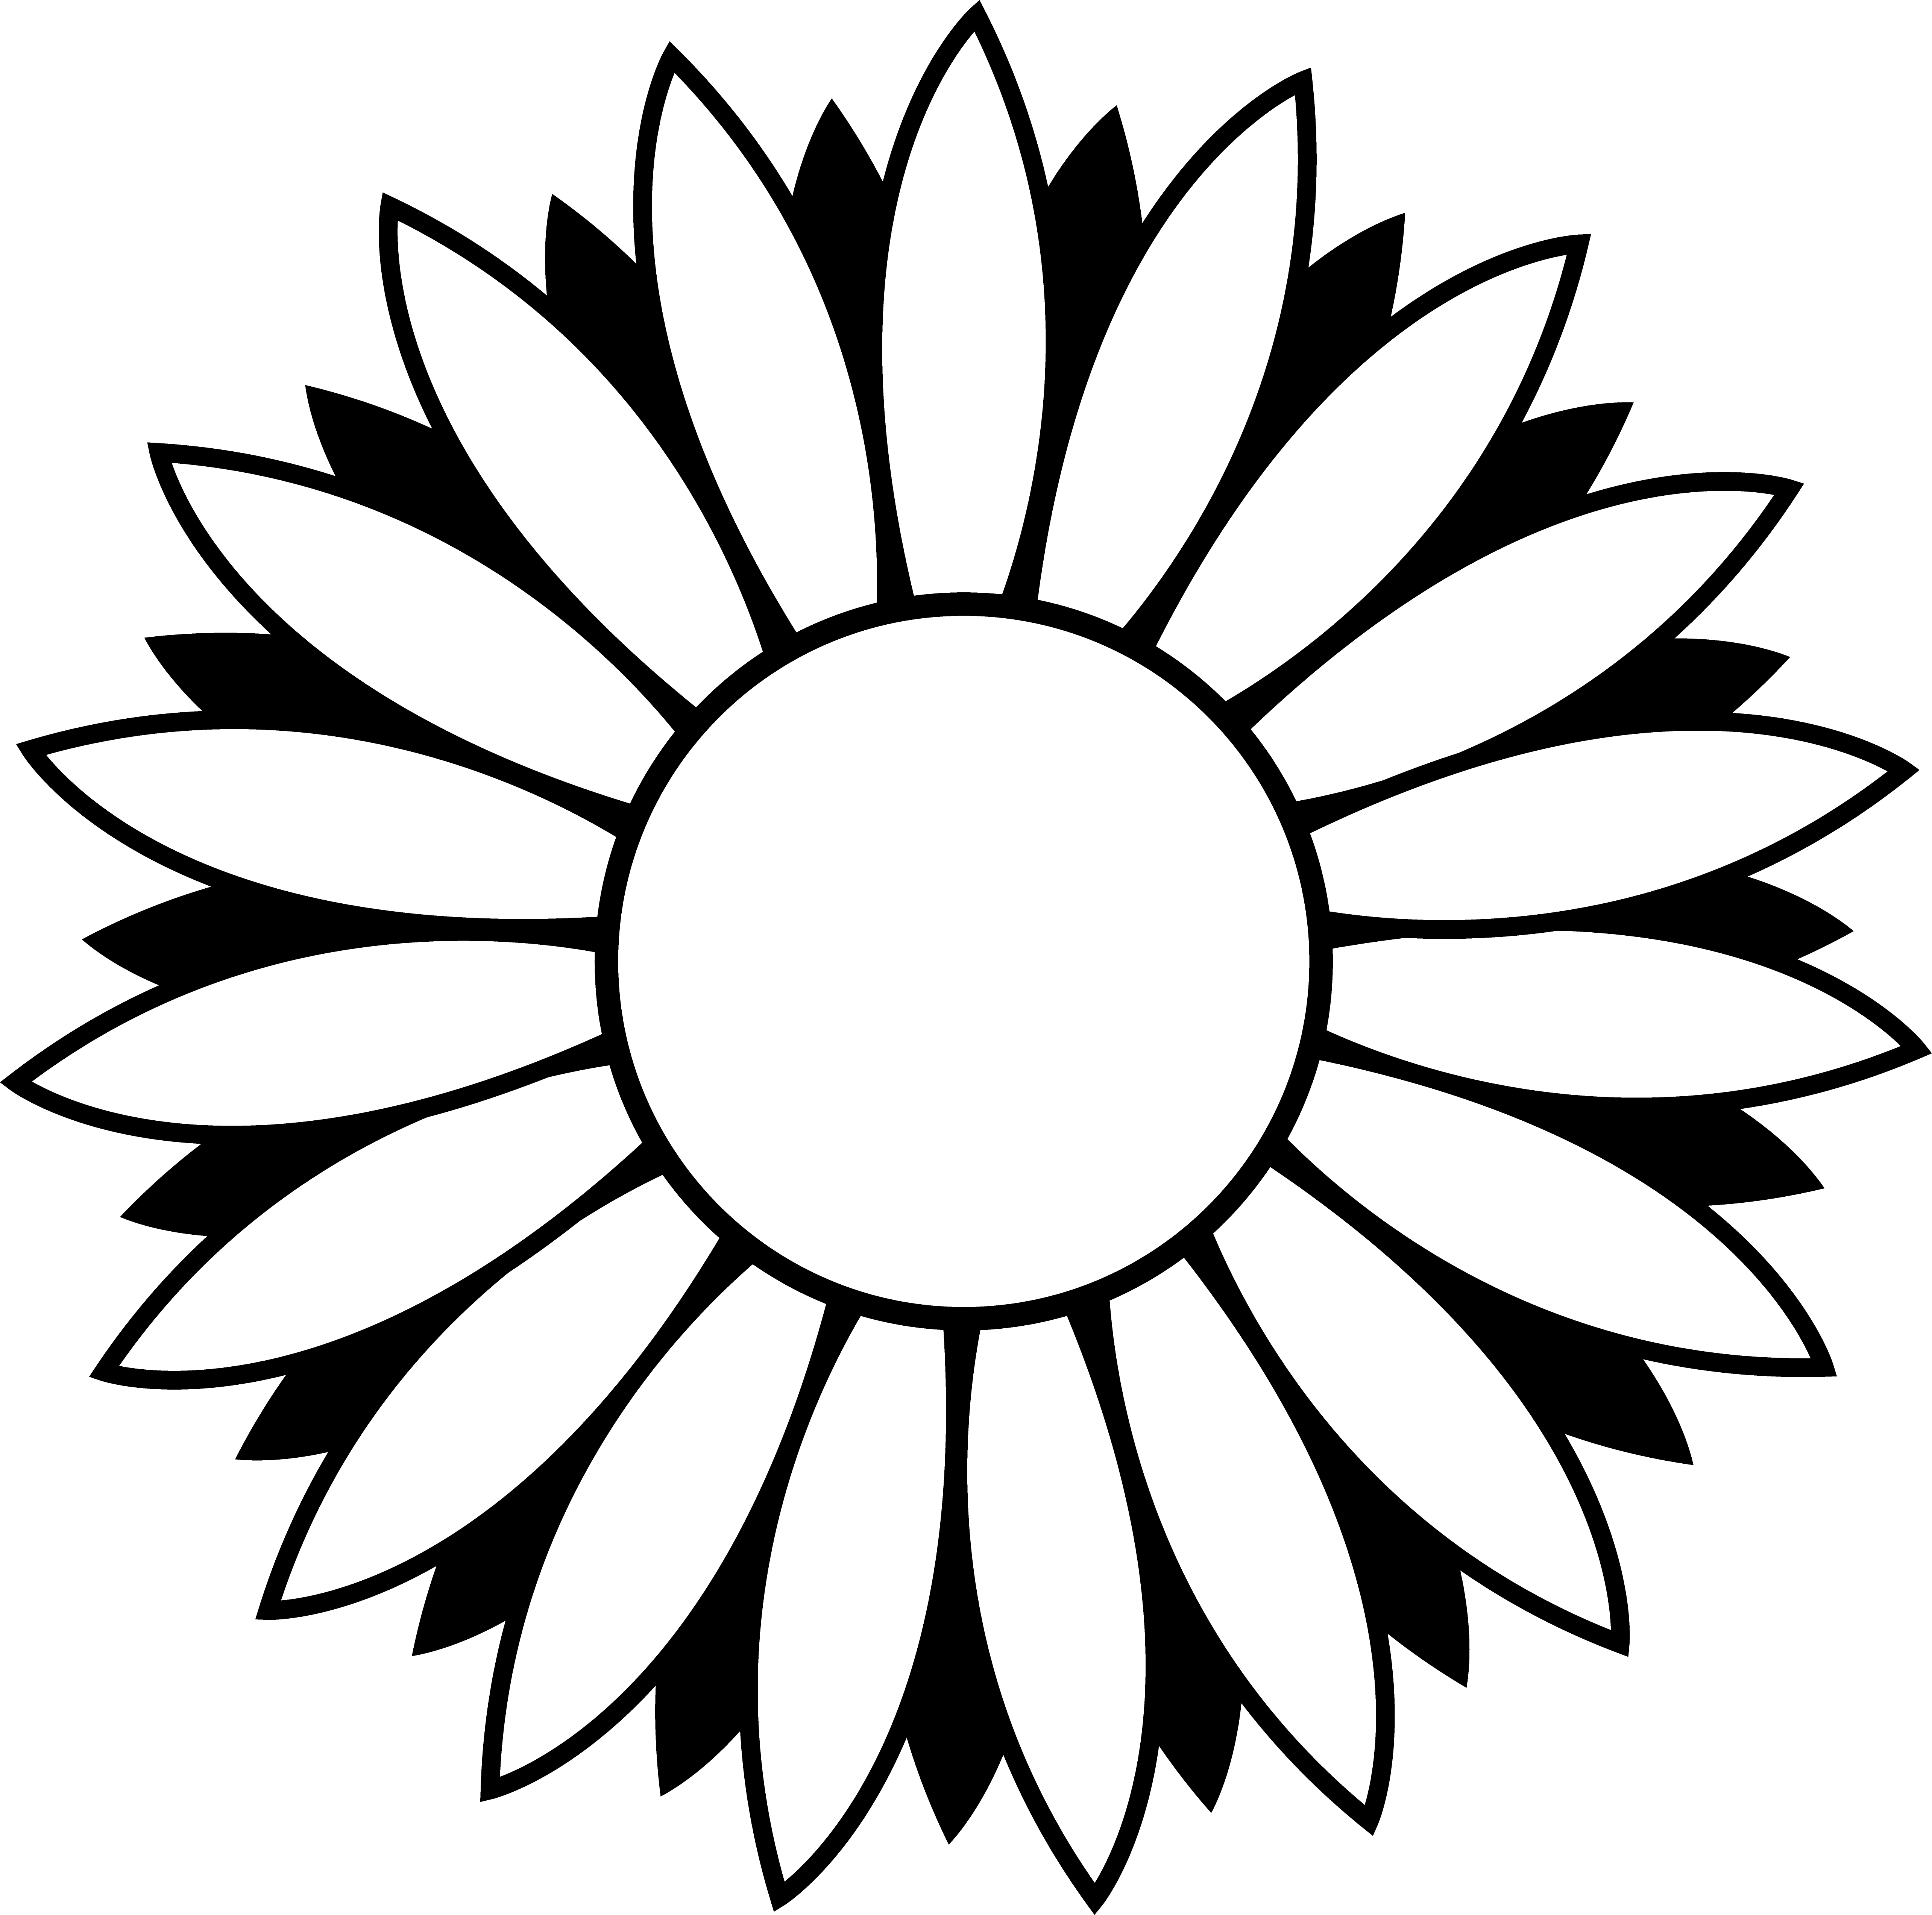 Flower outline clipart black and white